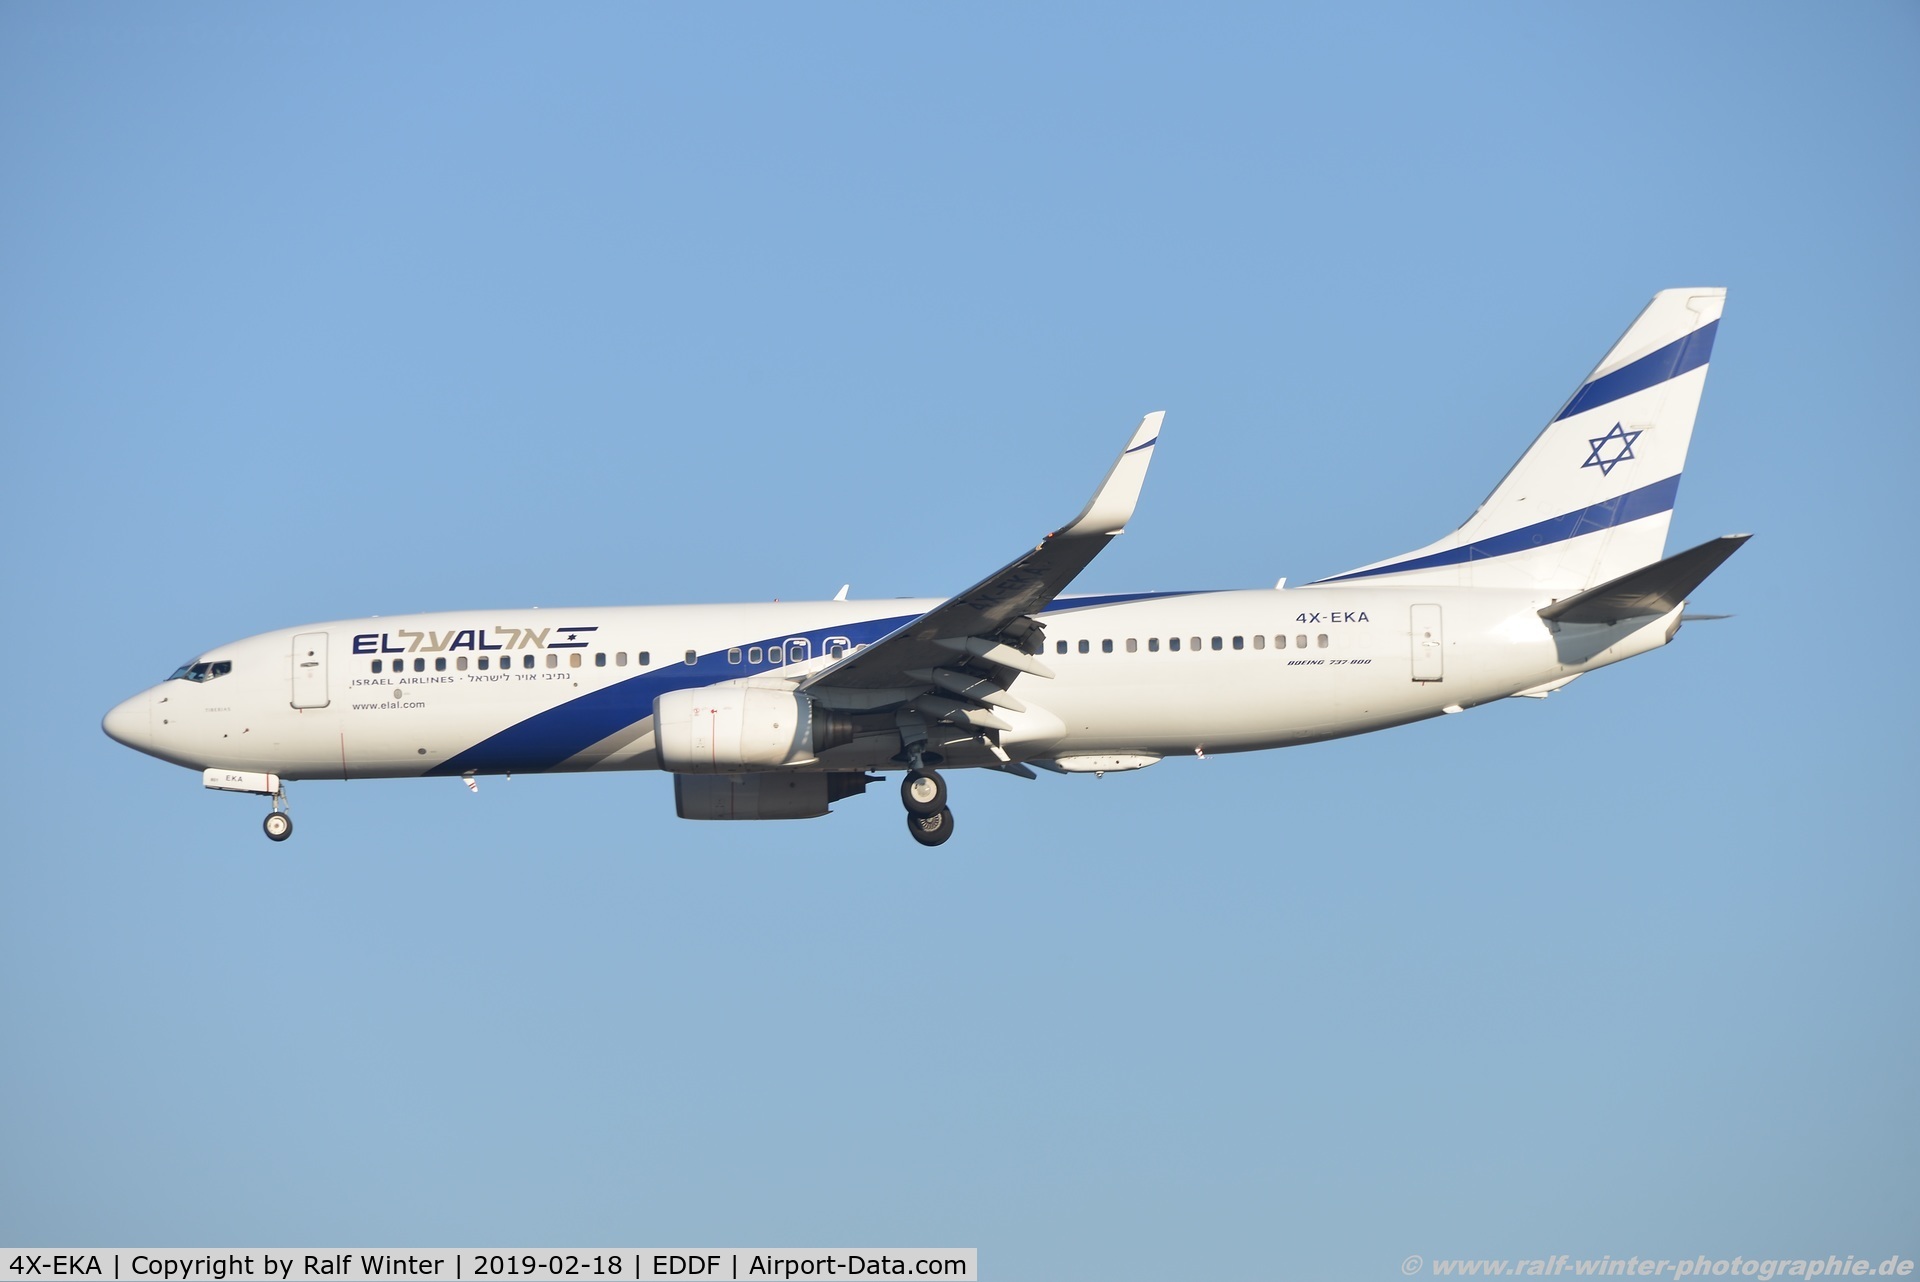 4X-EKA, 1999 Boeing 737-858 C/N 29957, Boeing 737-858(W) - LY ELY Al Al Israel Airlines 'Tiberias' - 29957 - 4X-EKA - 18.02.2019 - FRA